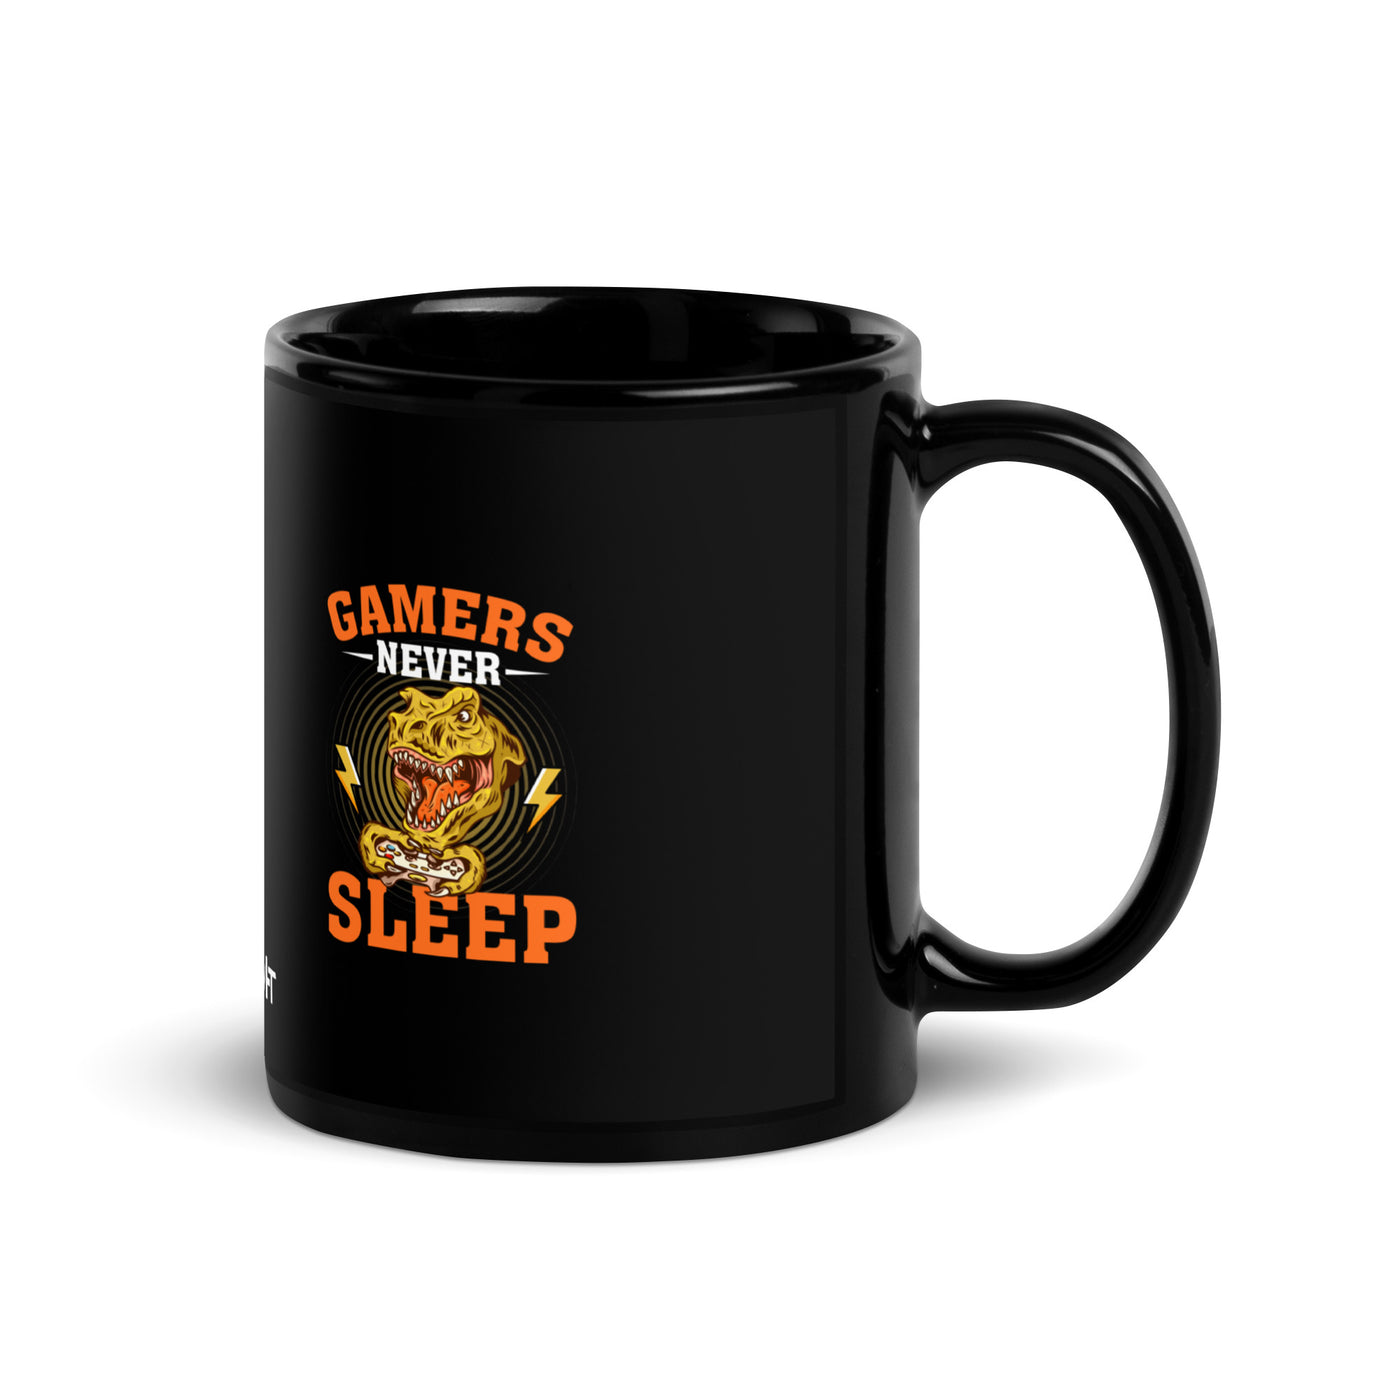 Gamers never sleep V2 - Black Glossy Mug